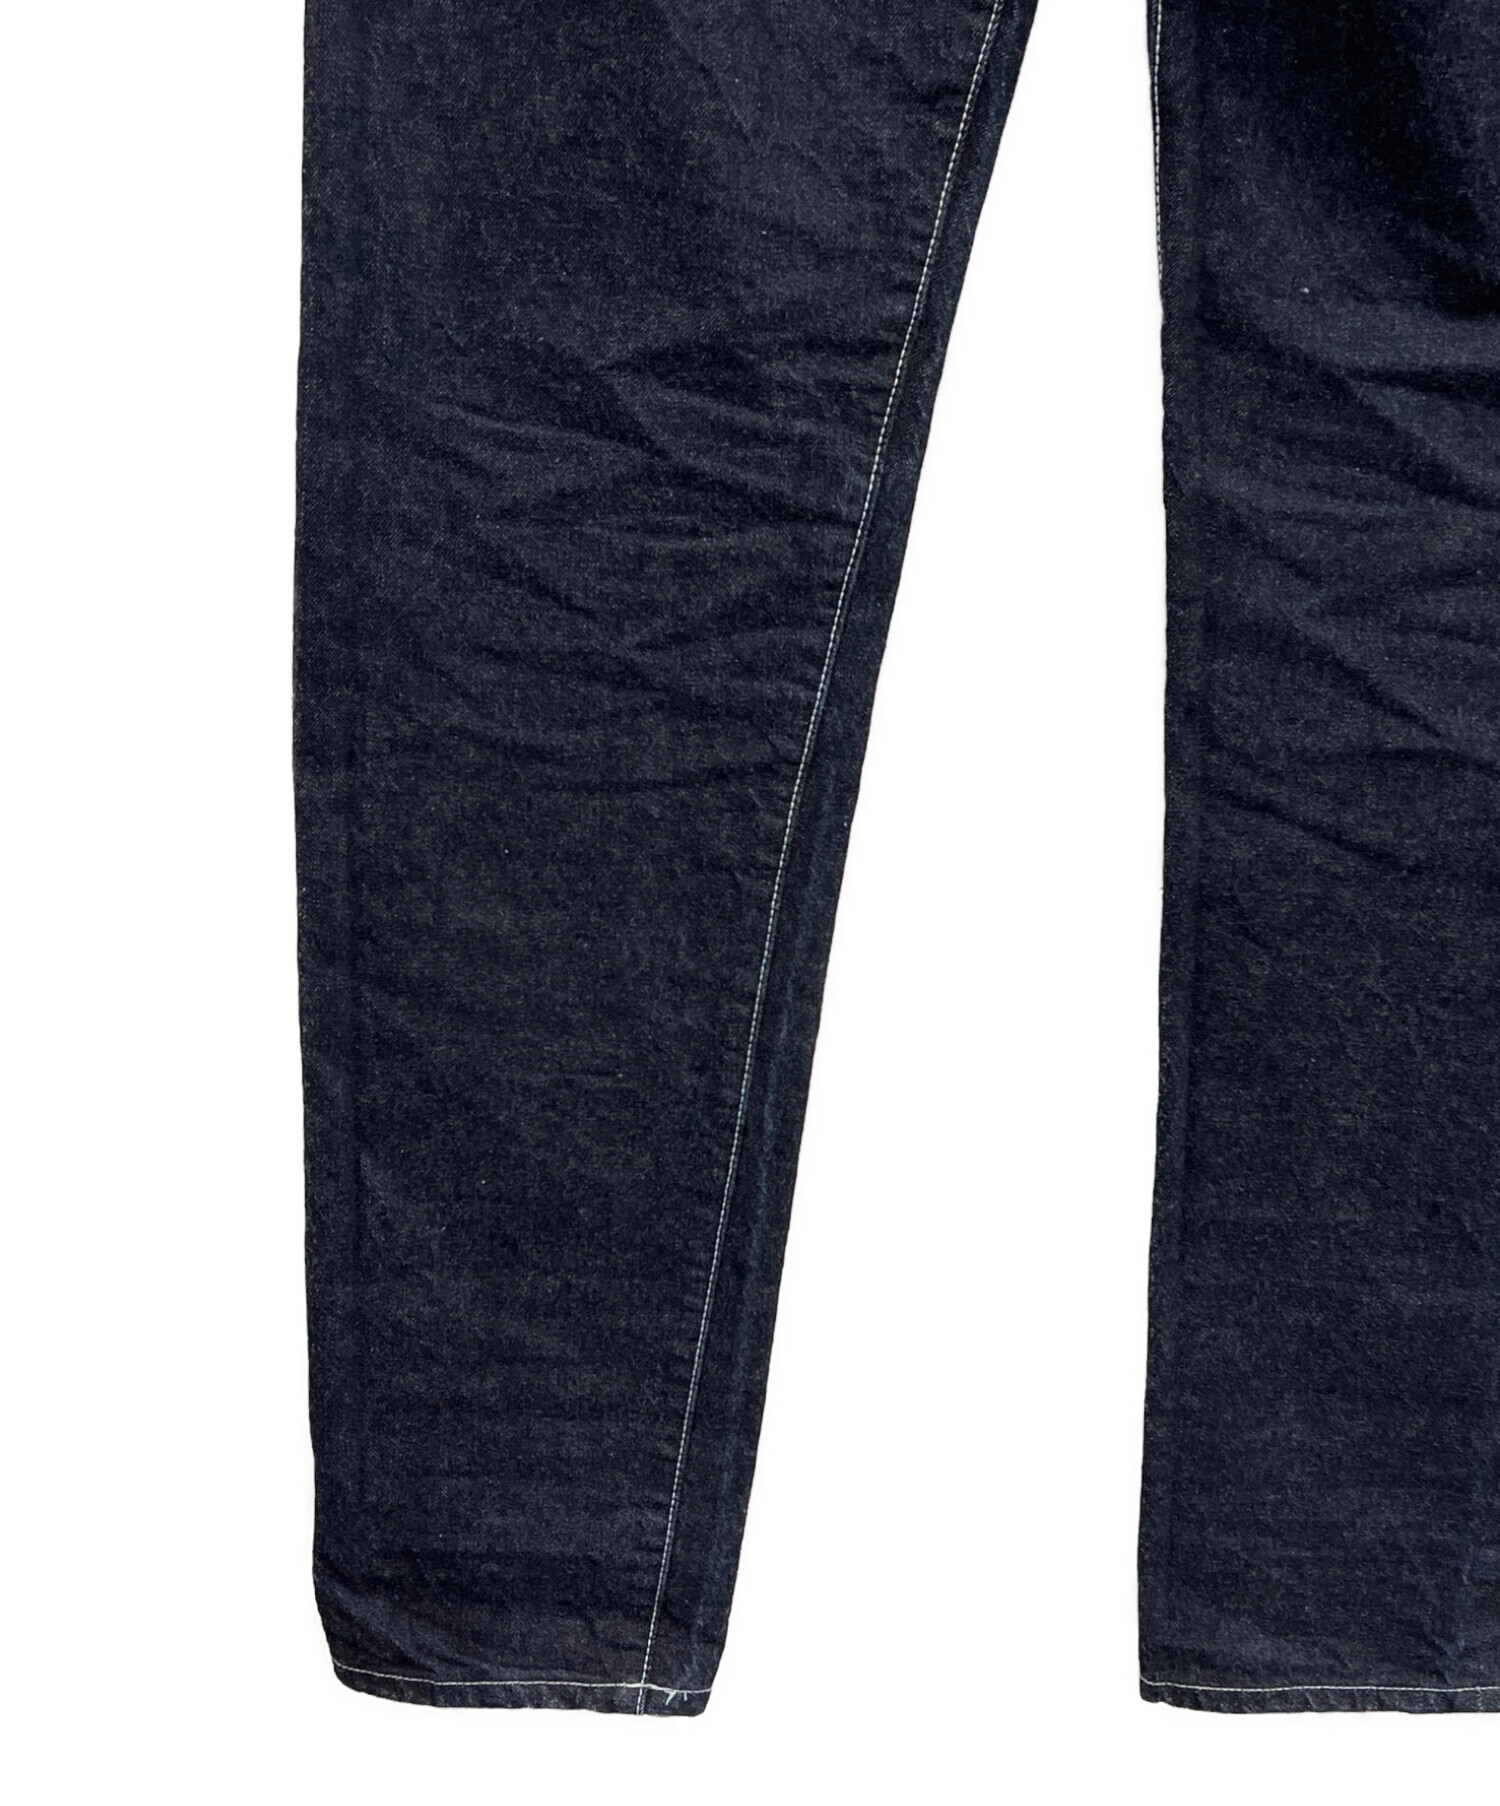 TENDER Co. (テンダー コー) TYPE130 Tapered Jeans ブルー サイズ:3